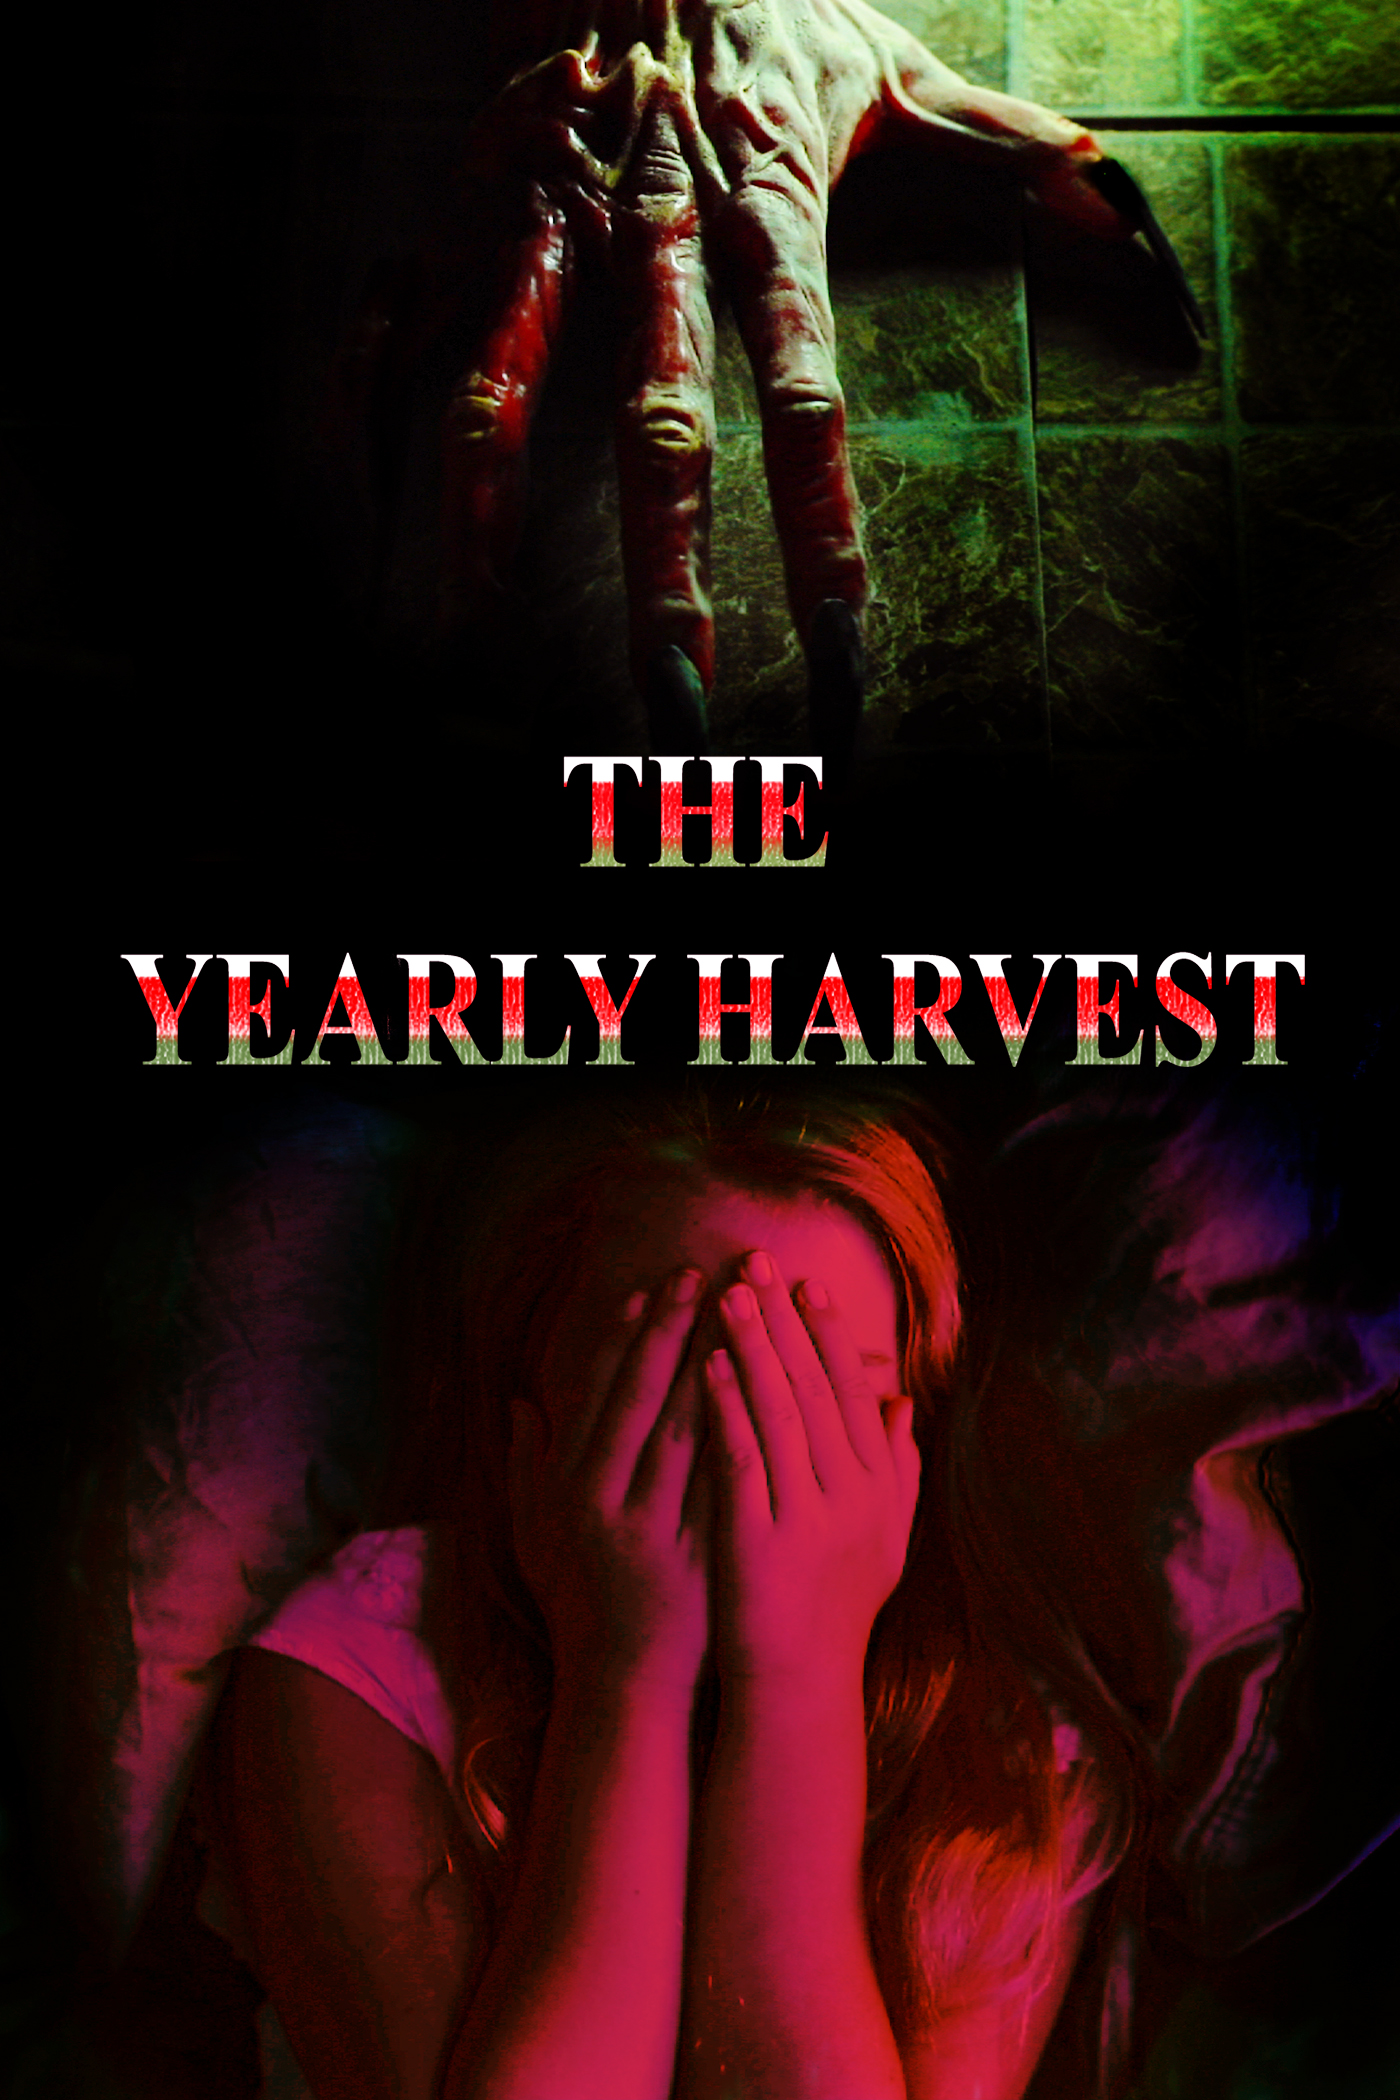 Nonton film The Yearly Harvest layarkaca21 indoxx1 ganool online streaming terbaru